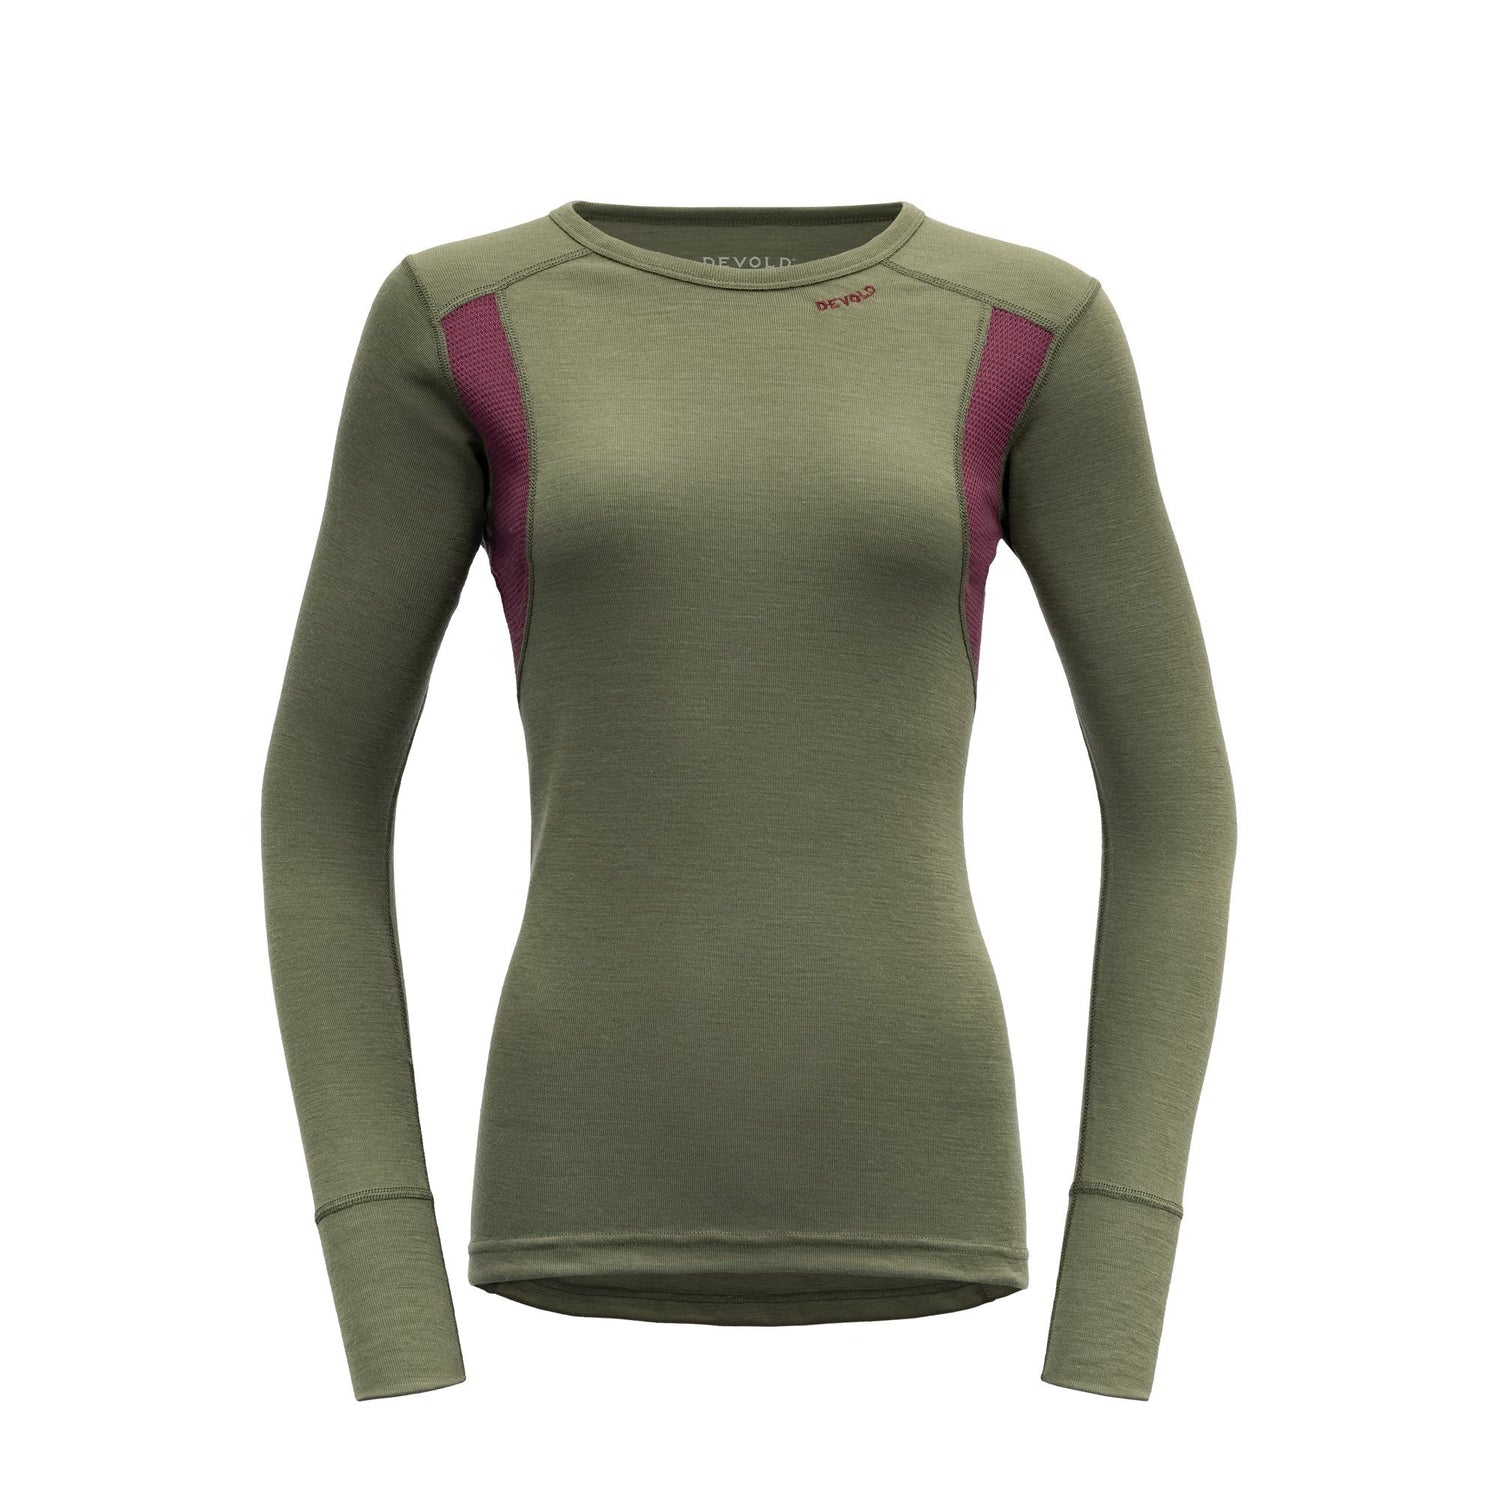 Devold W's Hiking Shirt - 100% Merino Wool Lichen/Beetroot Shirt